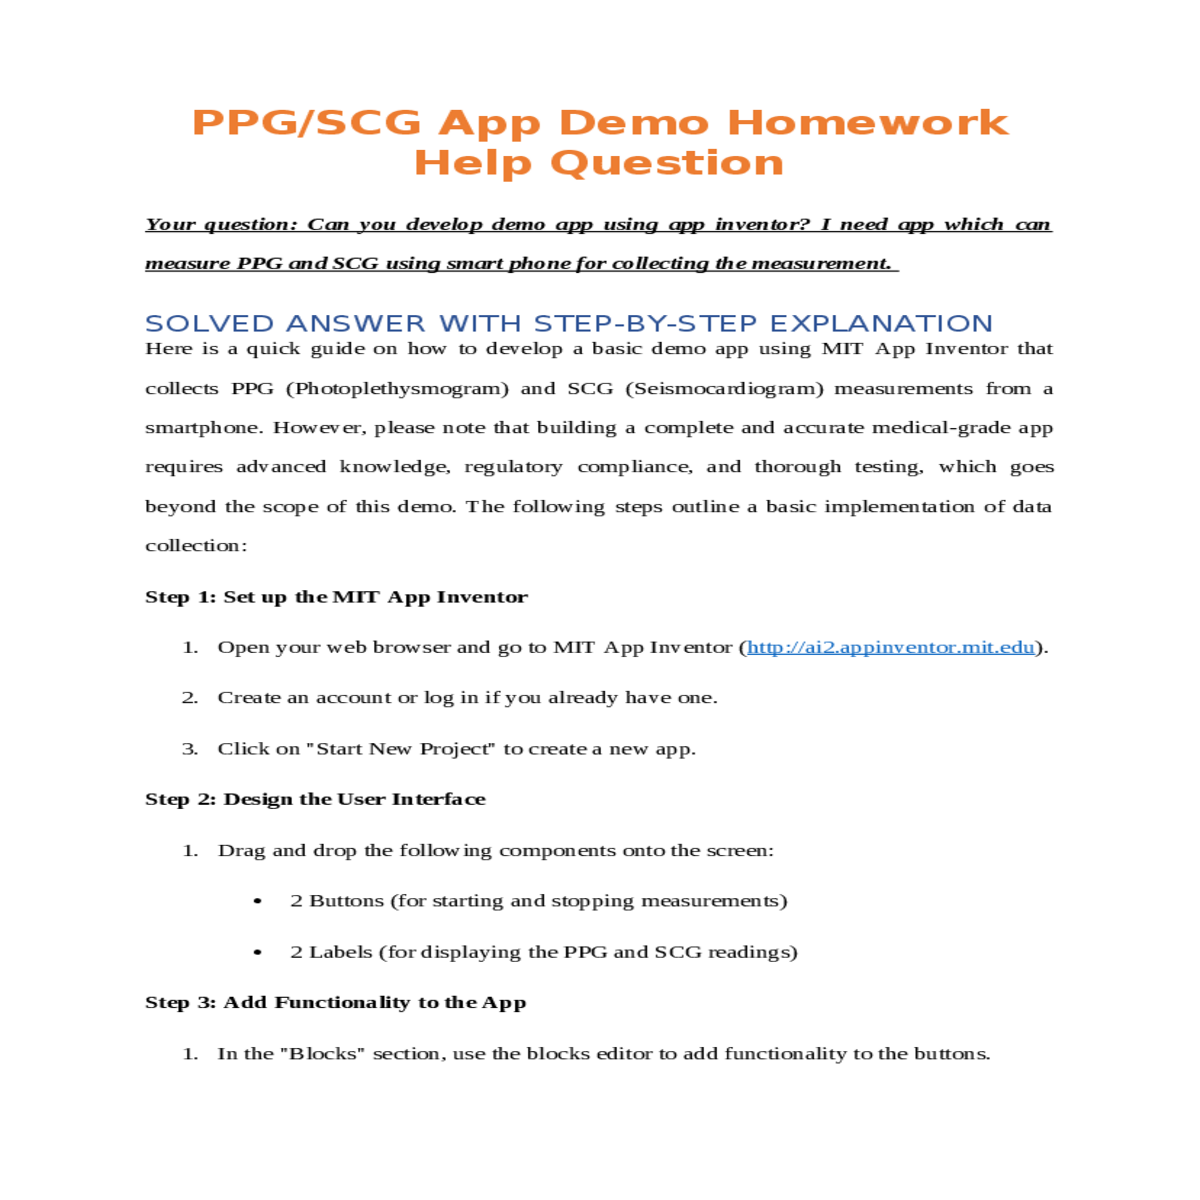 ppgscg app demo homework help question